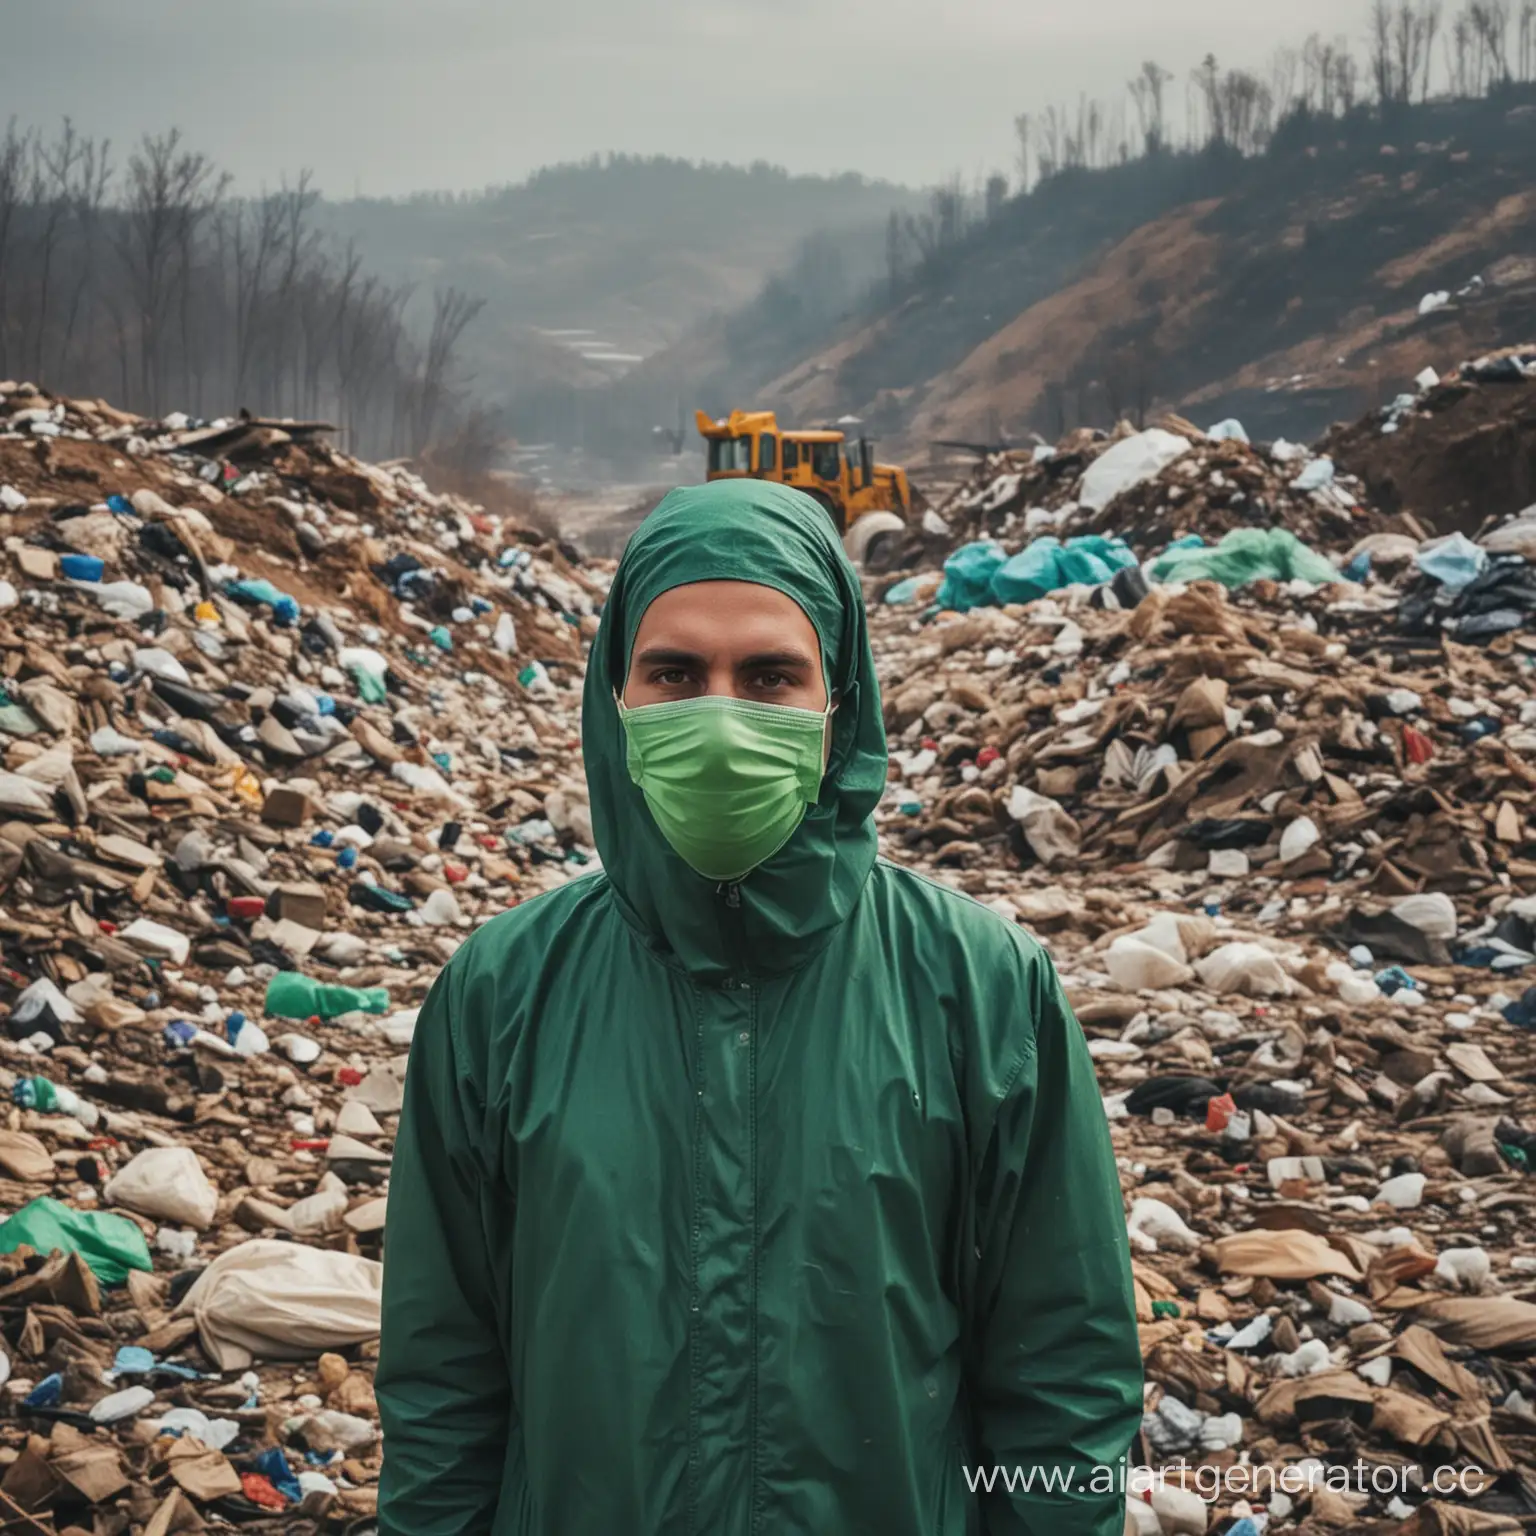 Green-Masked-Figure-Amidst-Garbage-Dumps